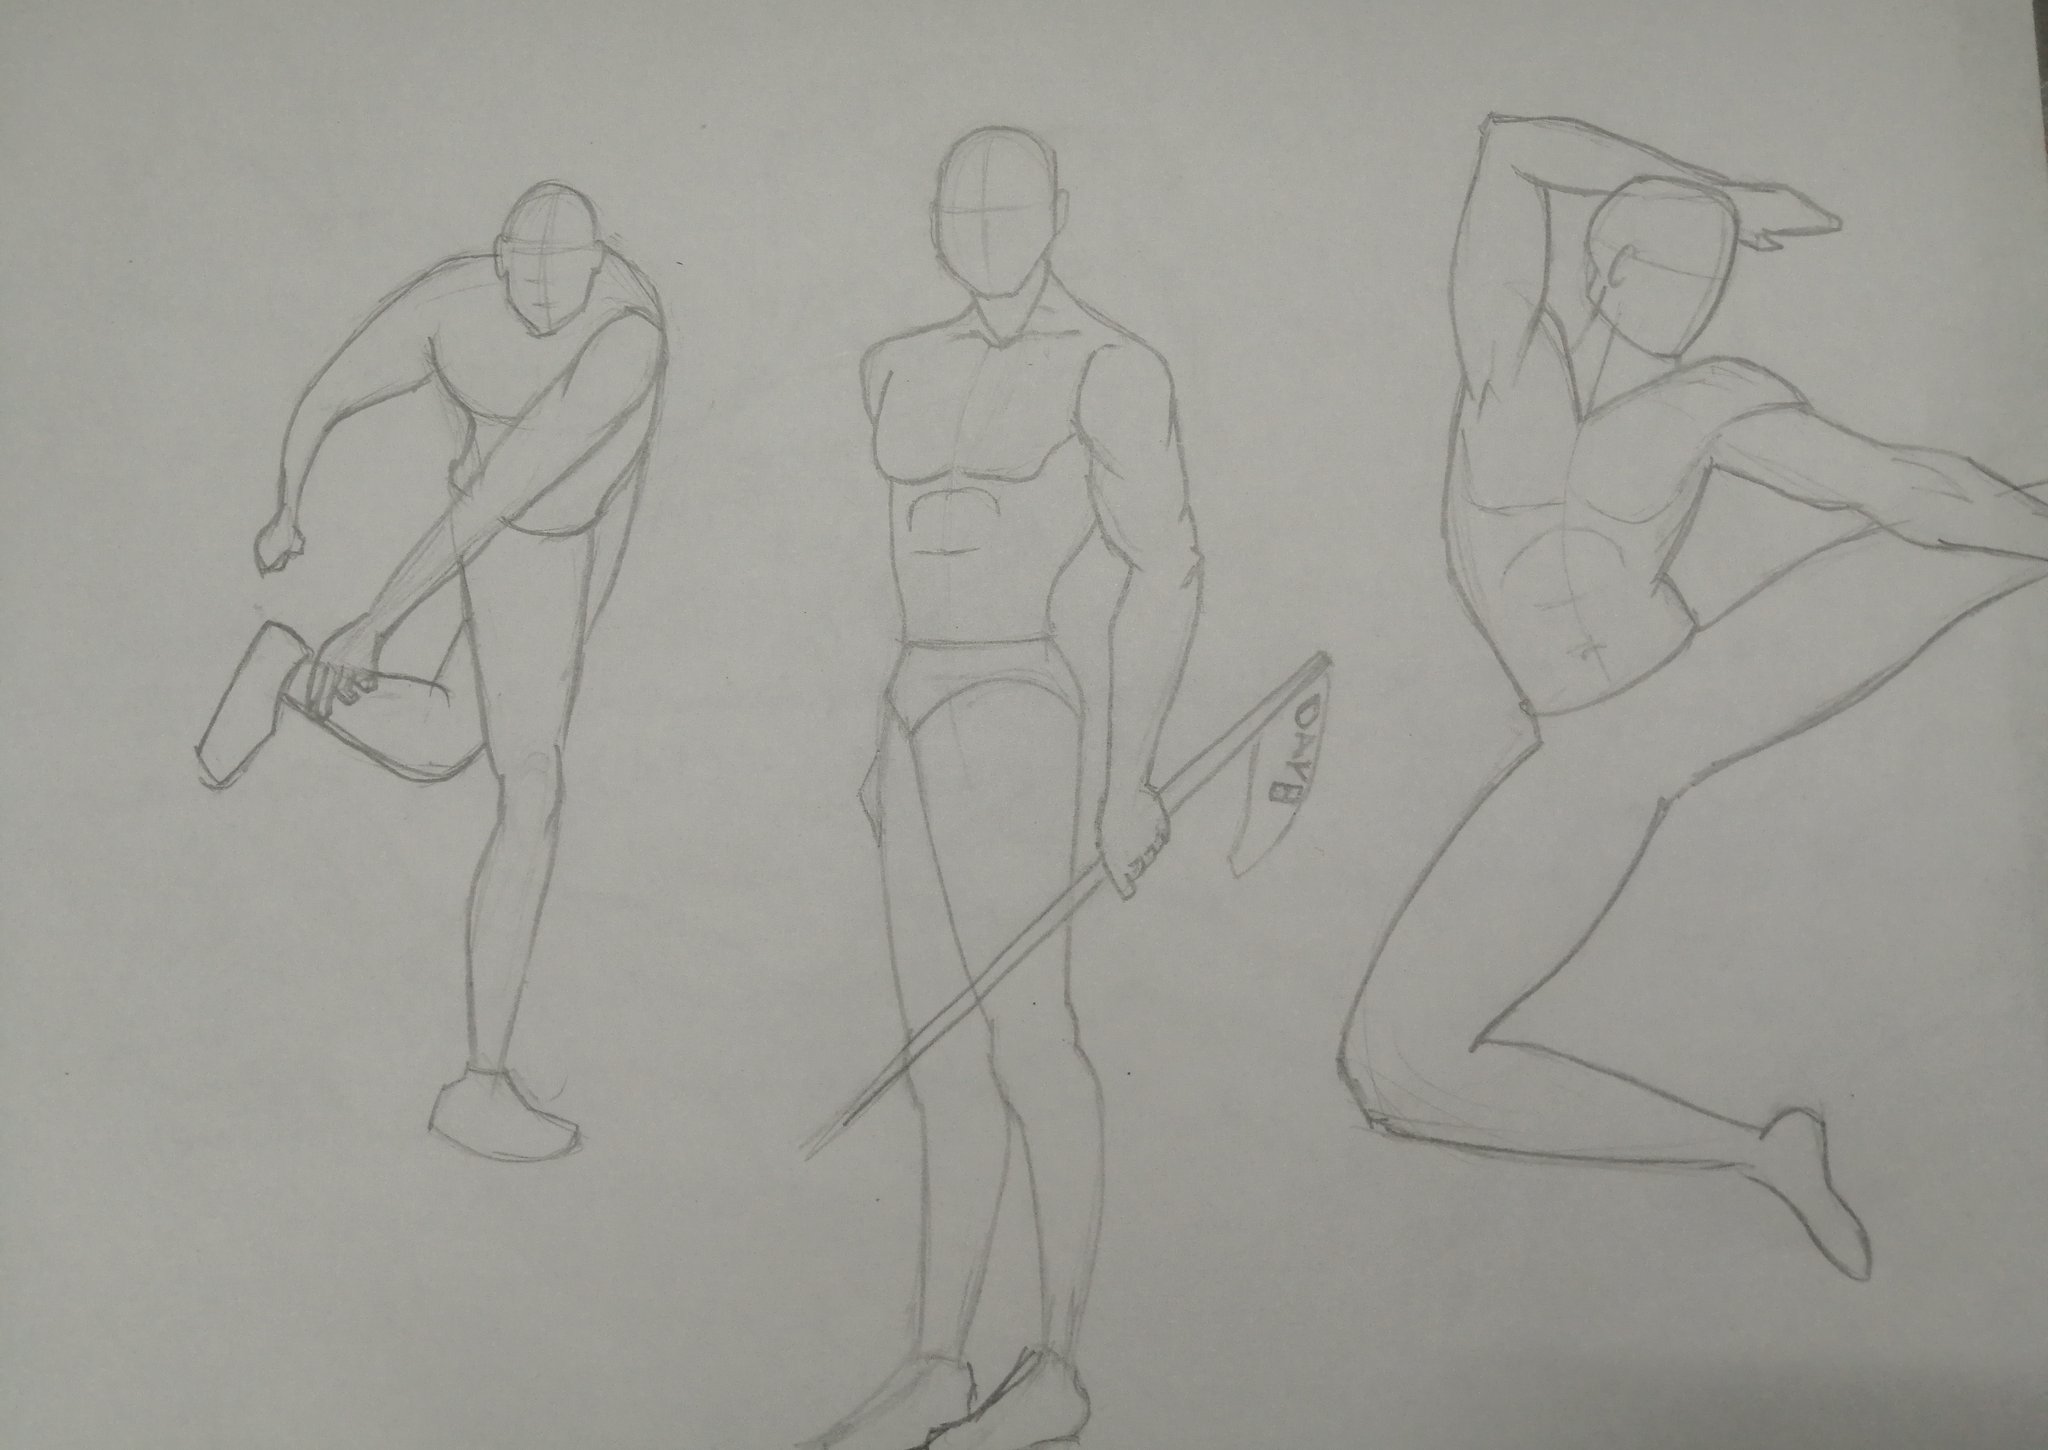 Comic Poses - Males jumping pose | PoseMy.Art